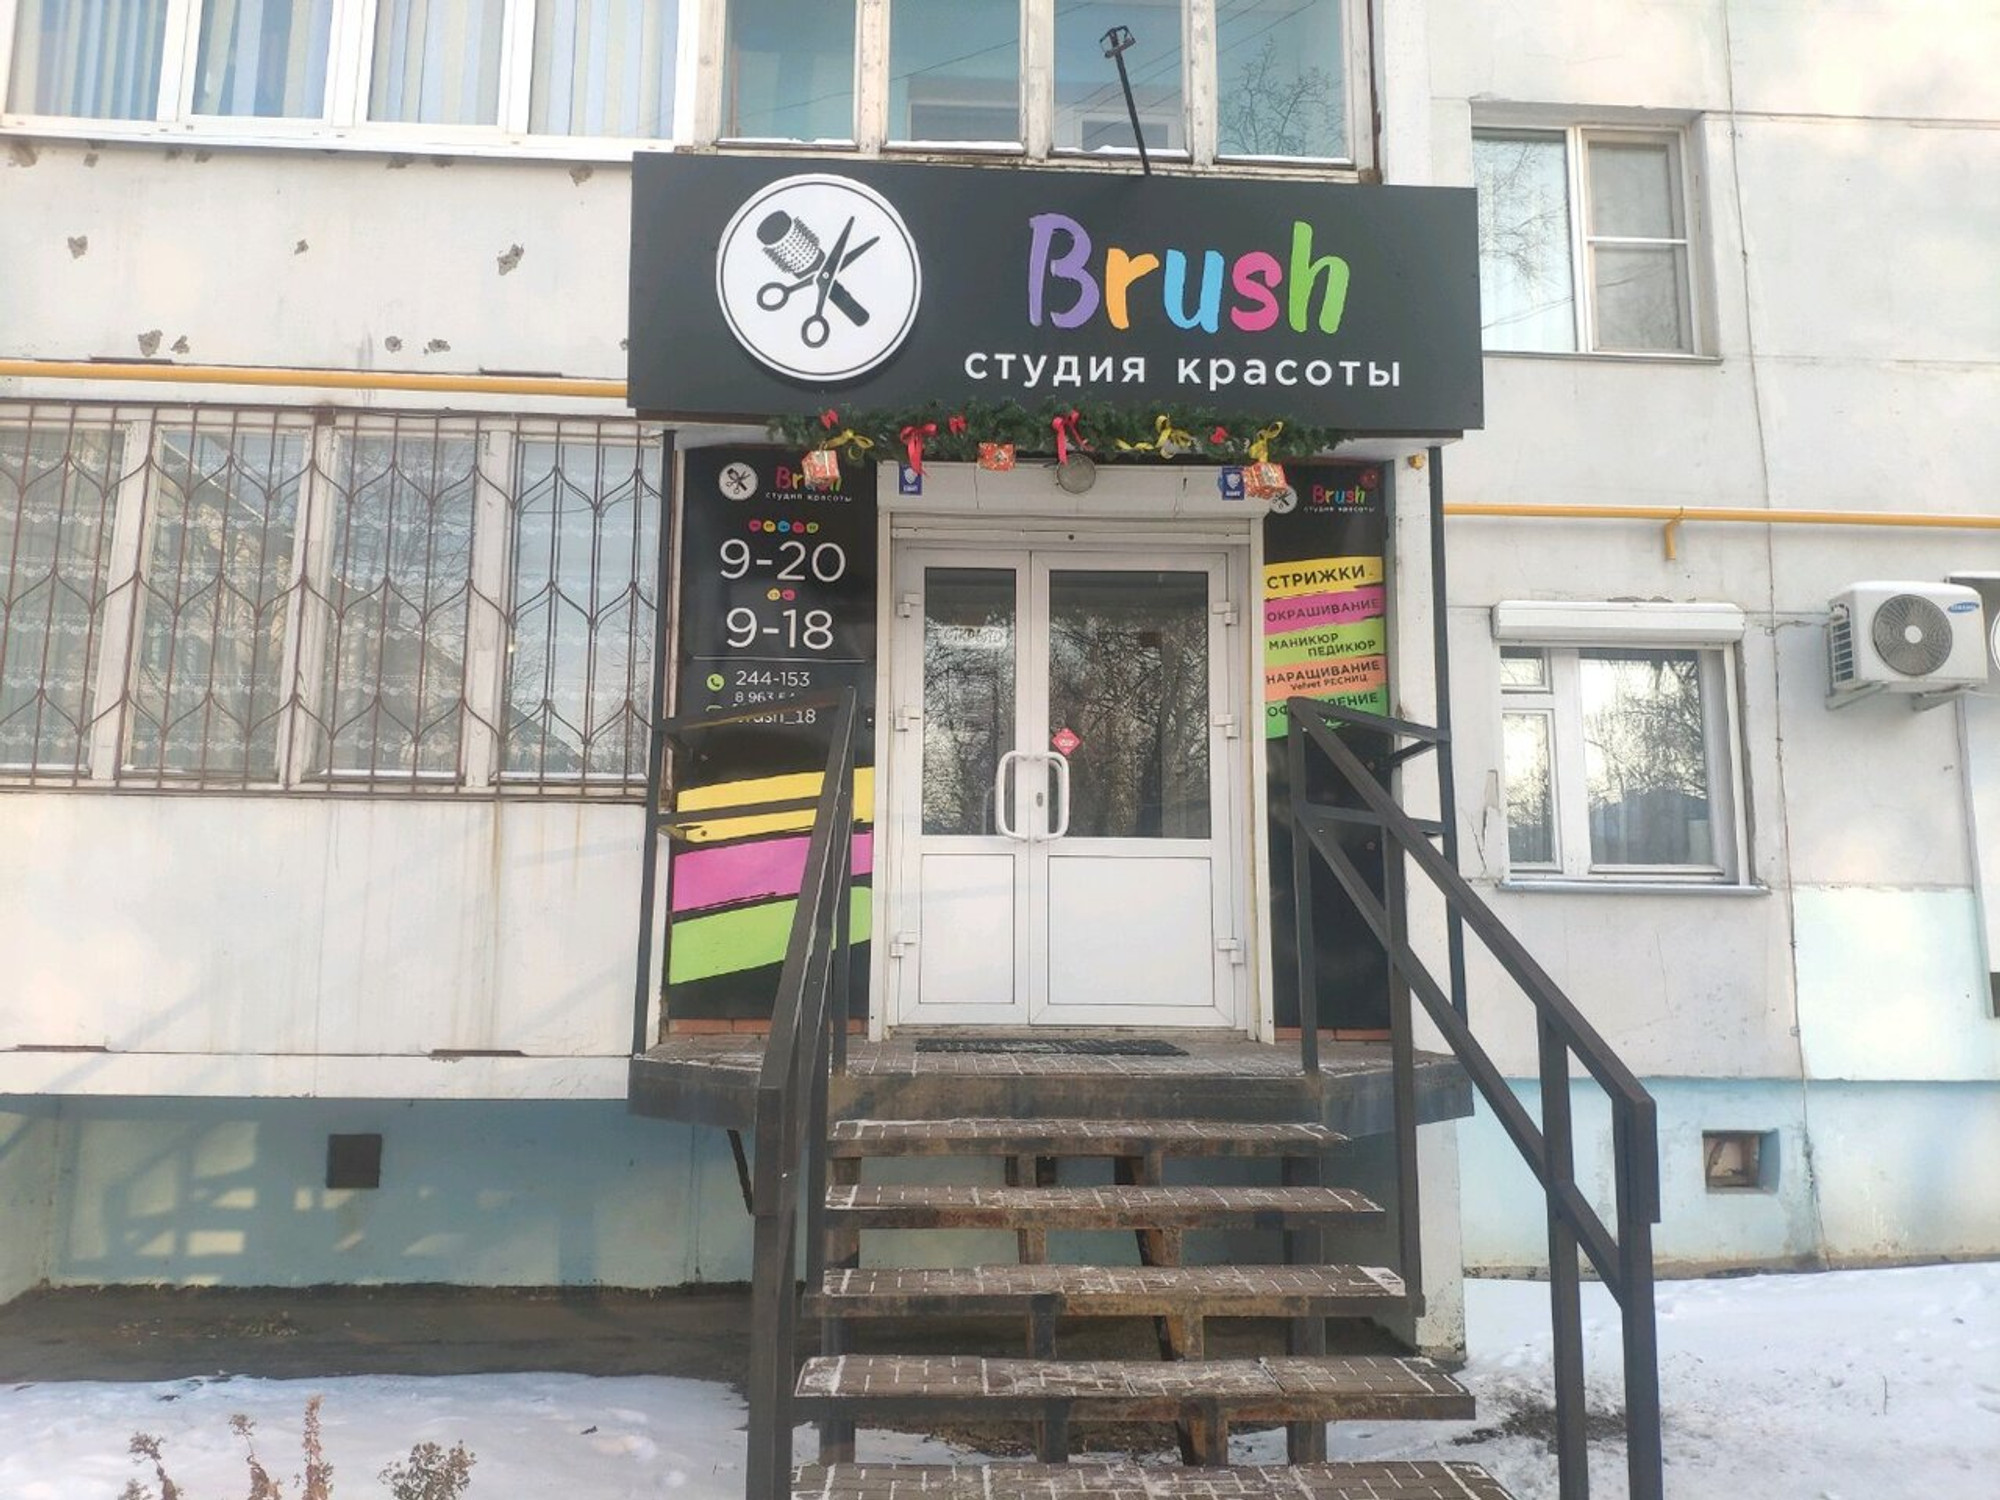 Brush (Салон красоты )